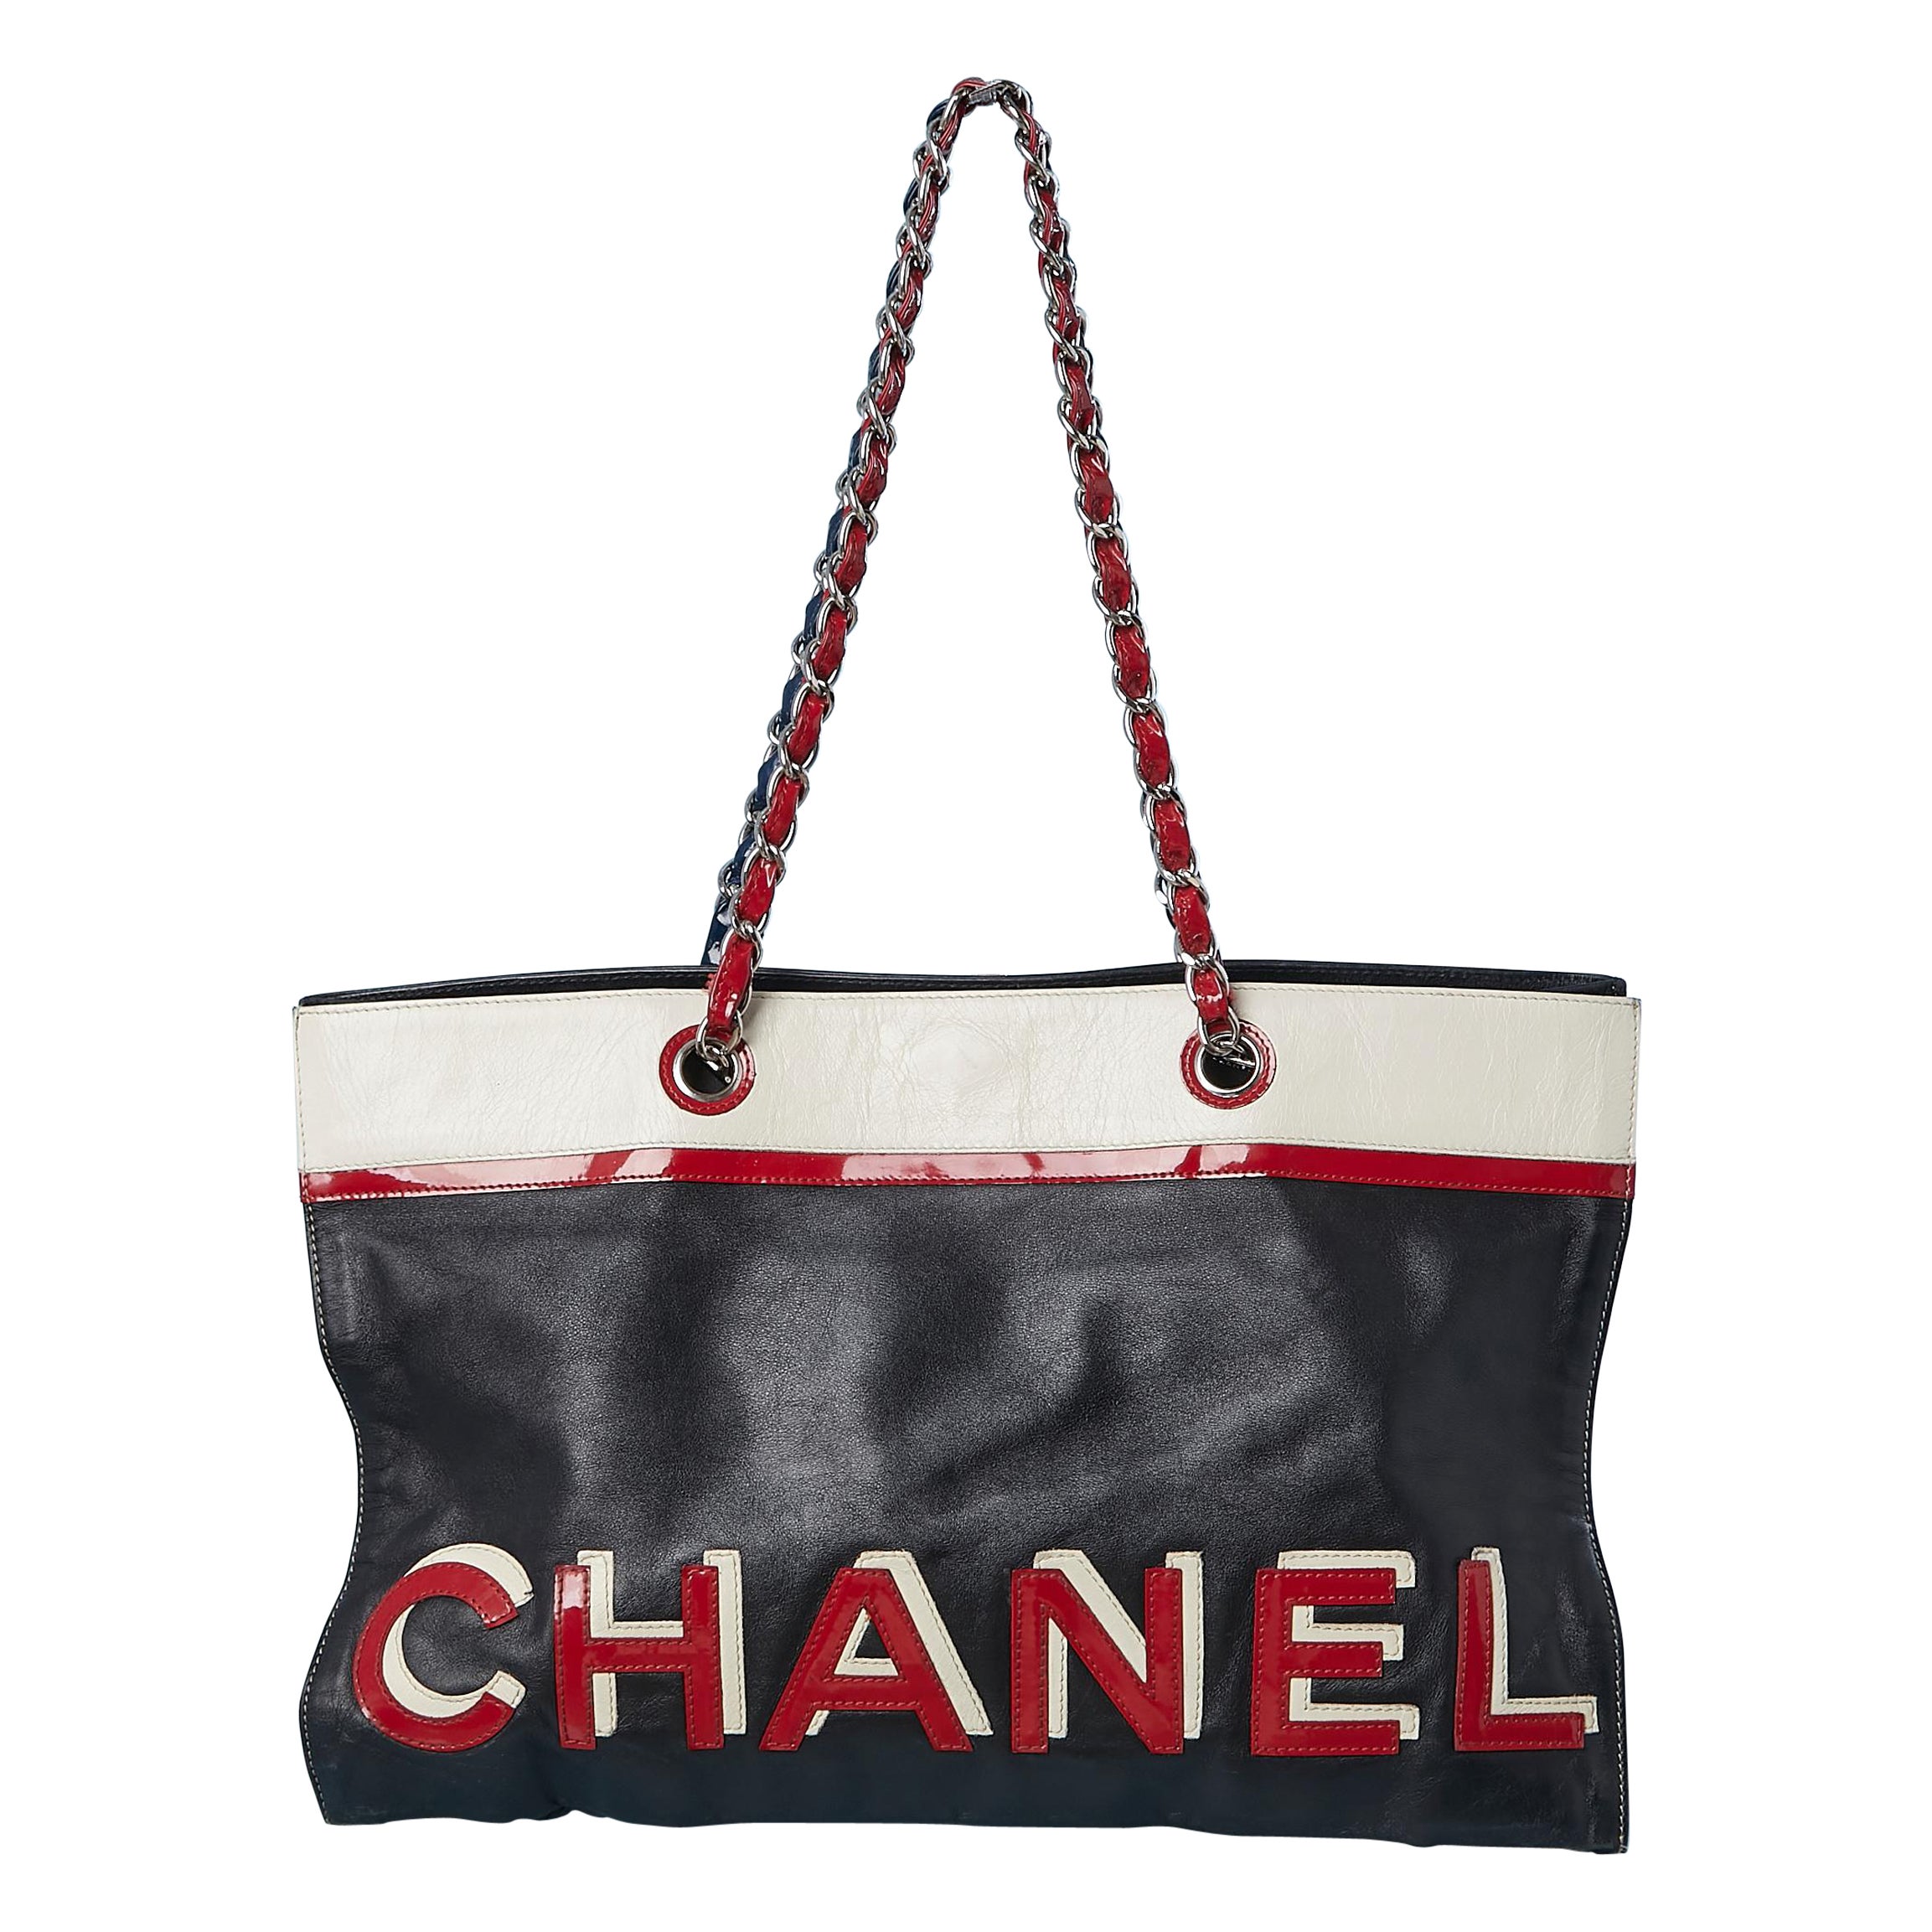 "Nr 5 Stars" handbag mix leather and patent leather shoulder bag Chanel 2002/03  For Sale